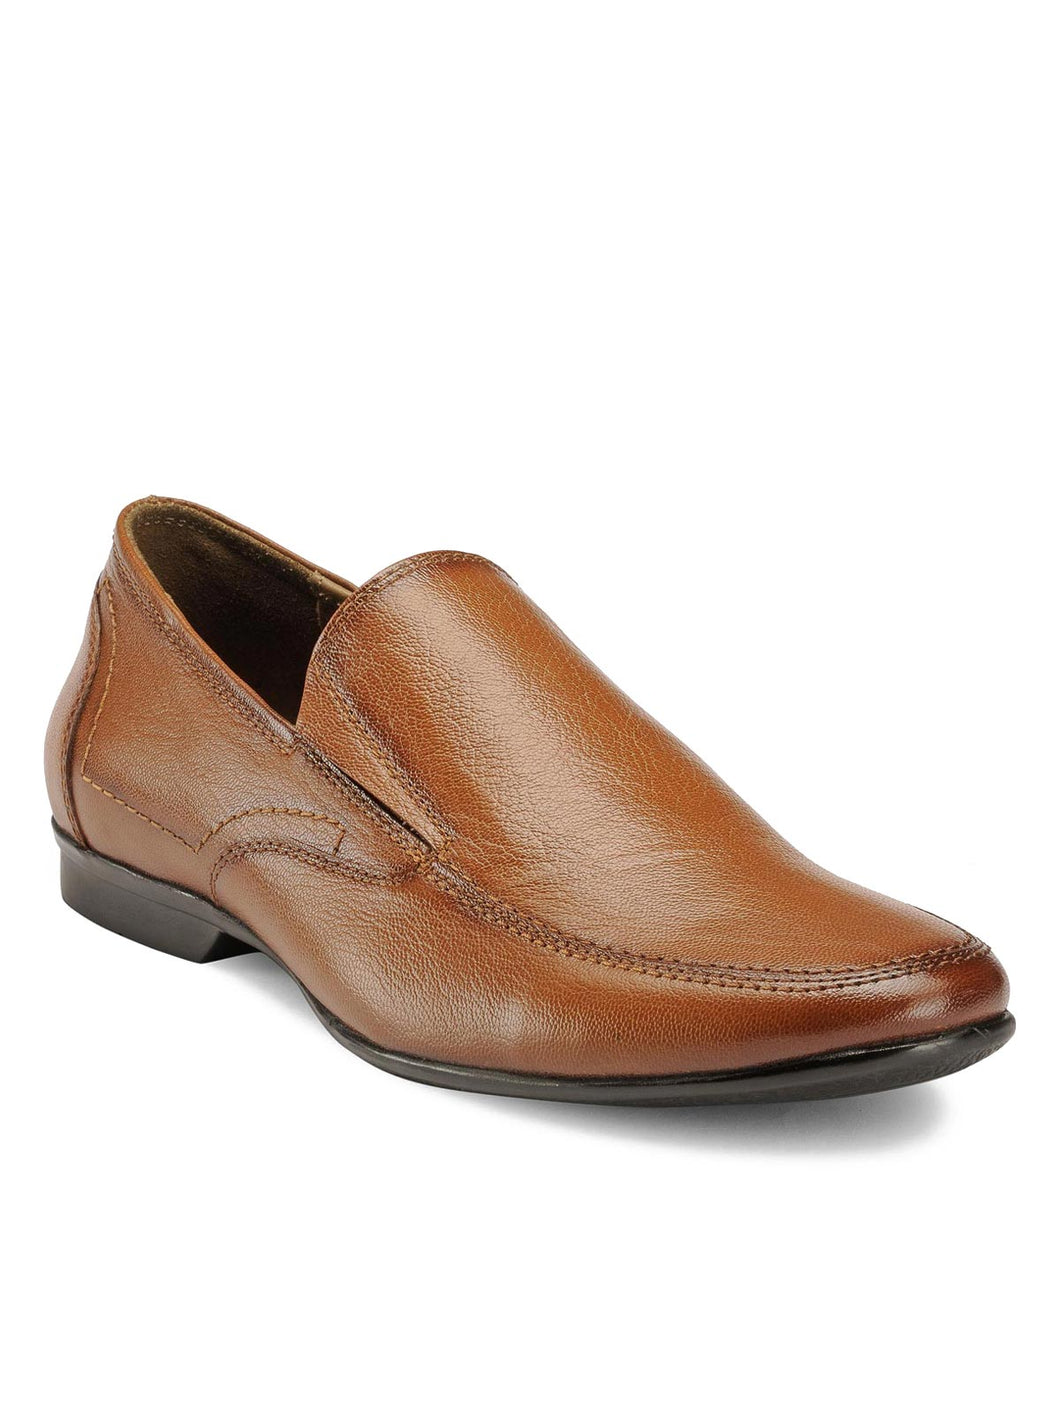 Teakwood Genuine Leather slip-ons shoes